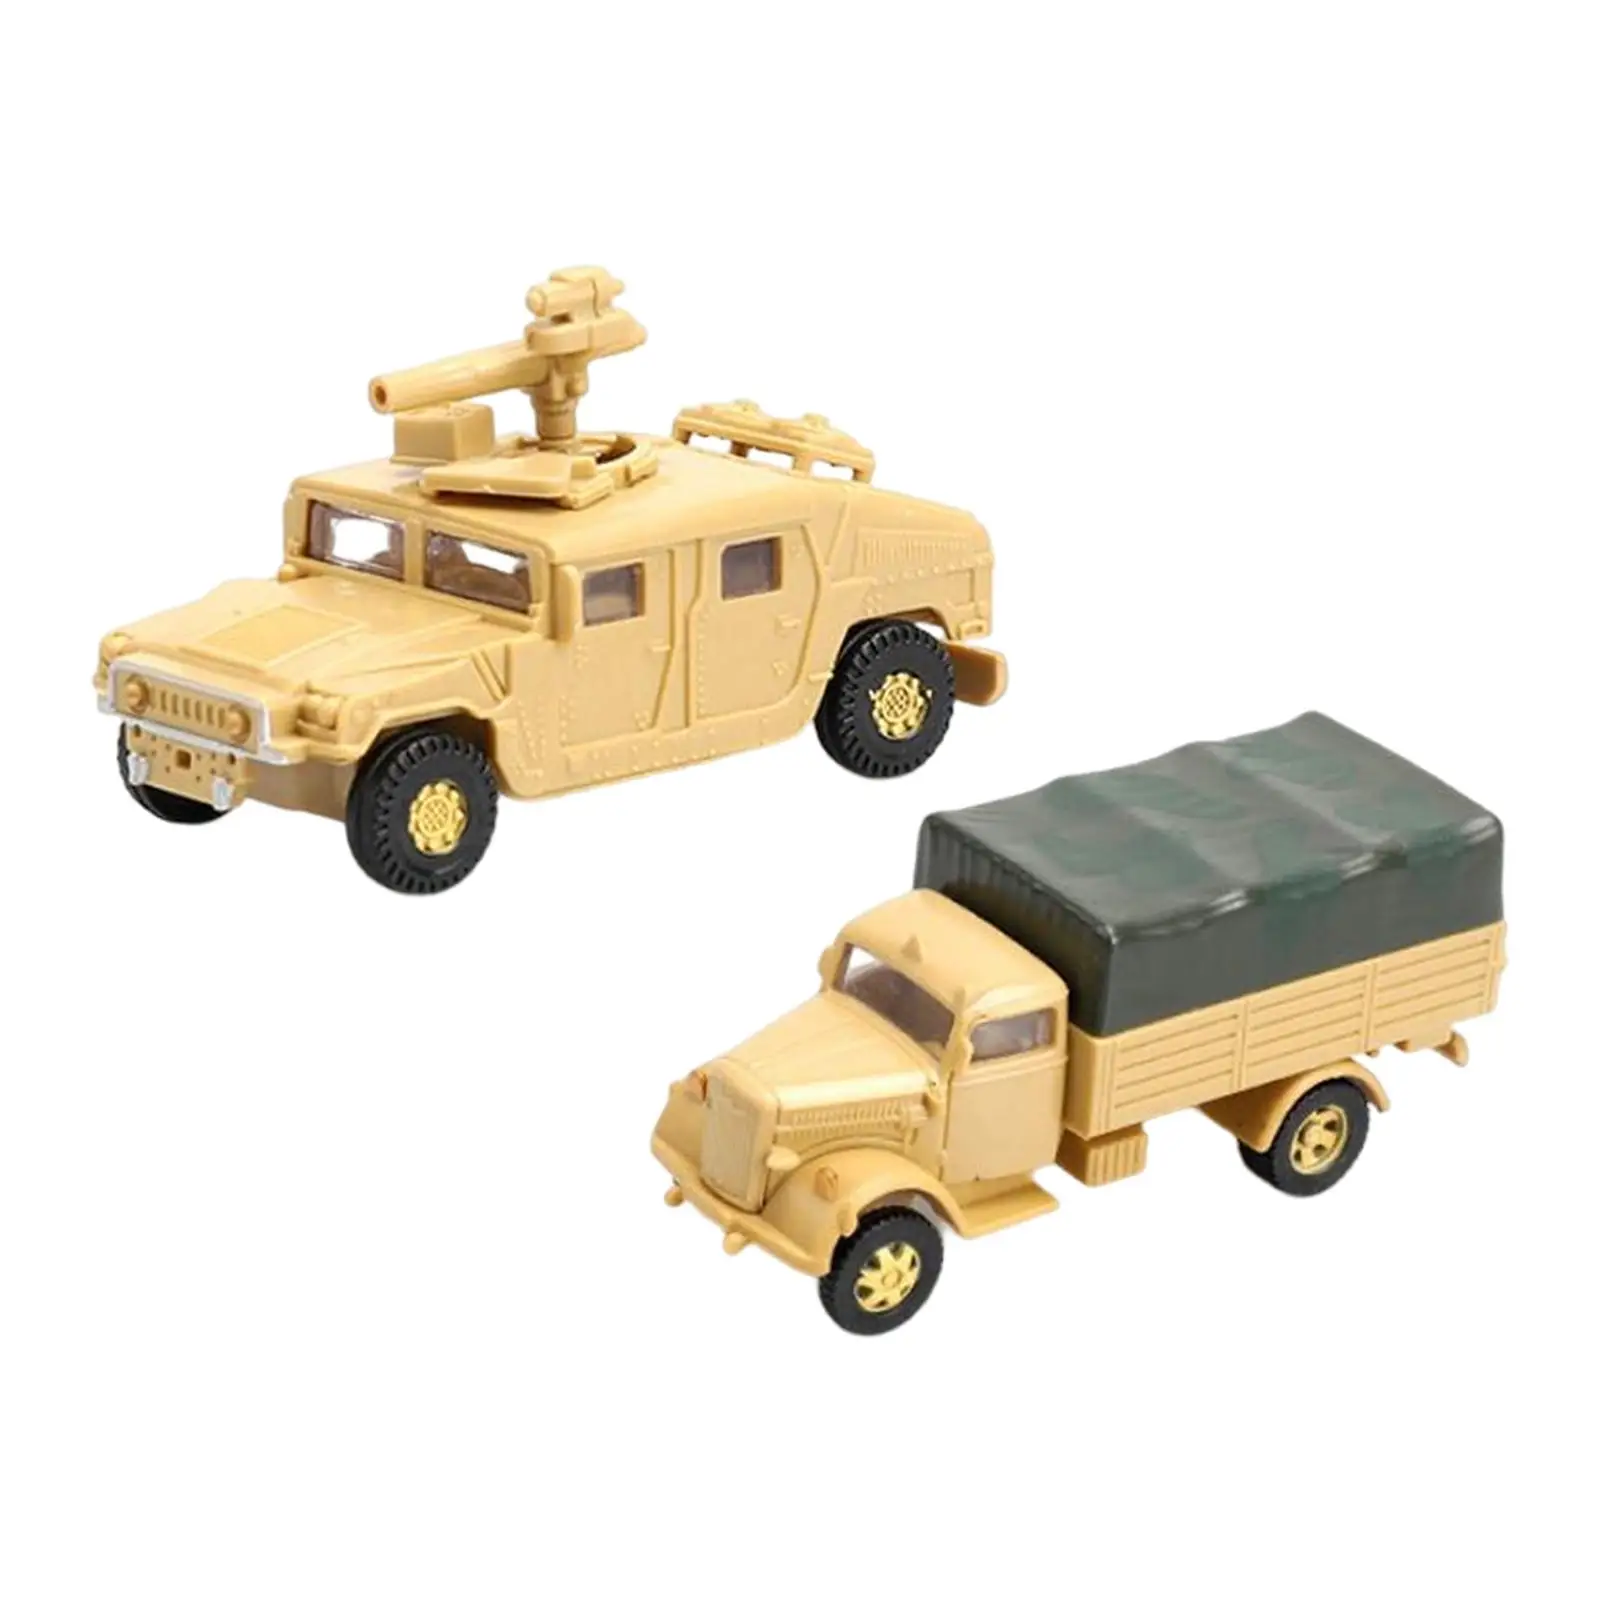 2 Pieces 1:72 Assembly Model Toy Car Decorative Mini Pocket Size Play Models